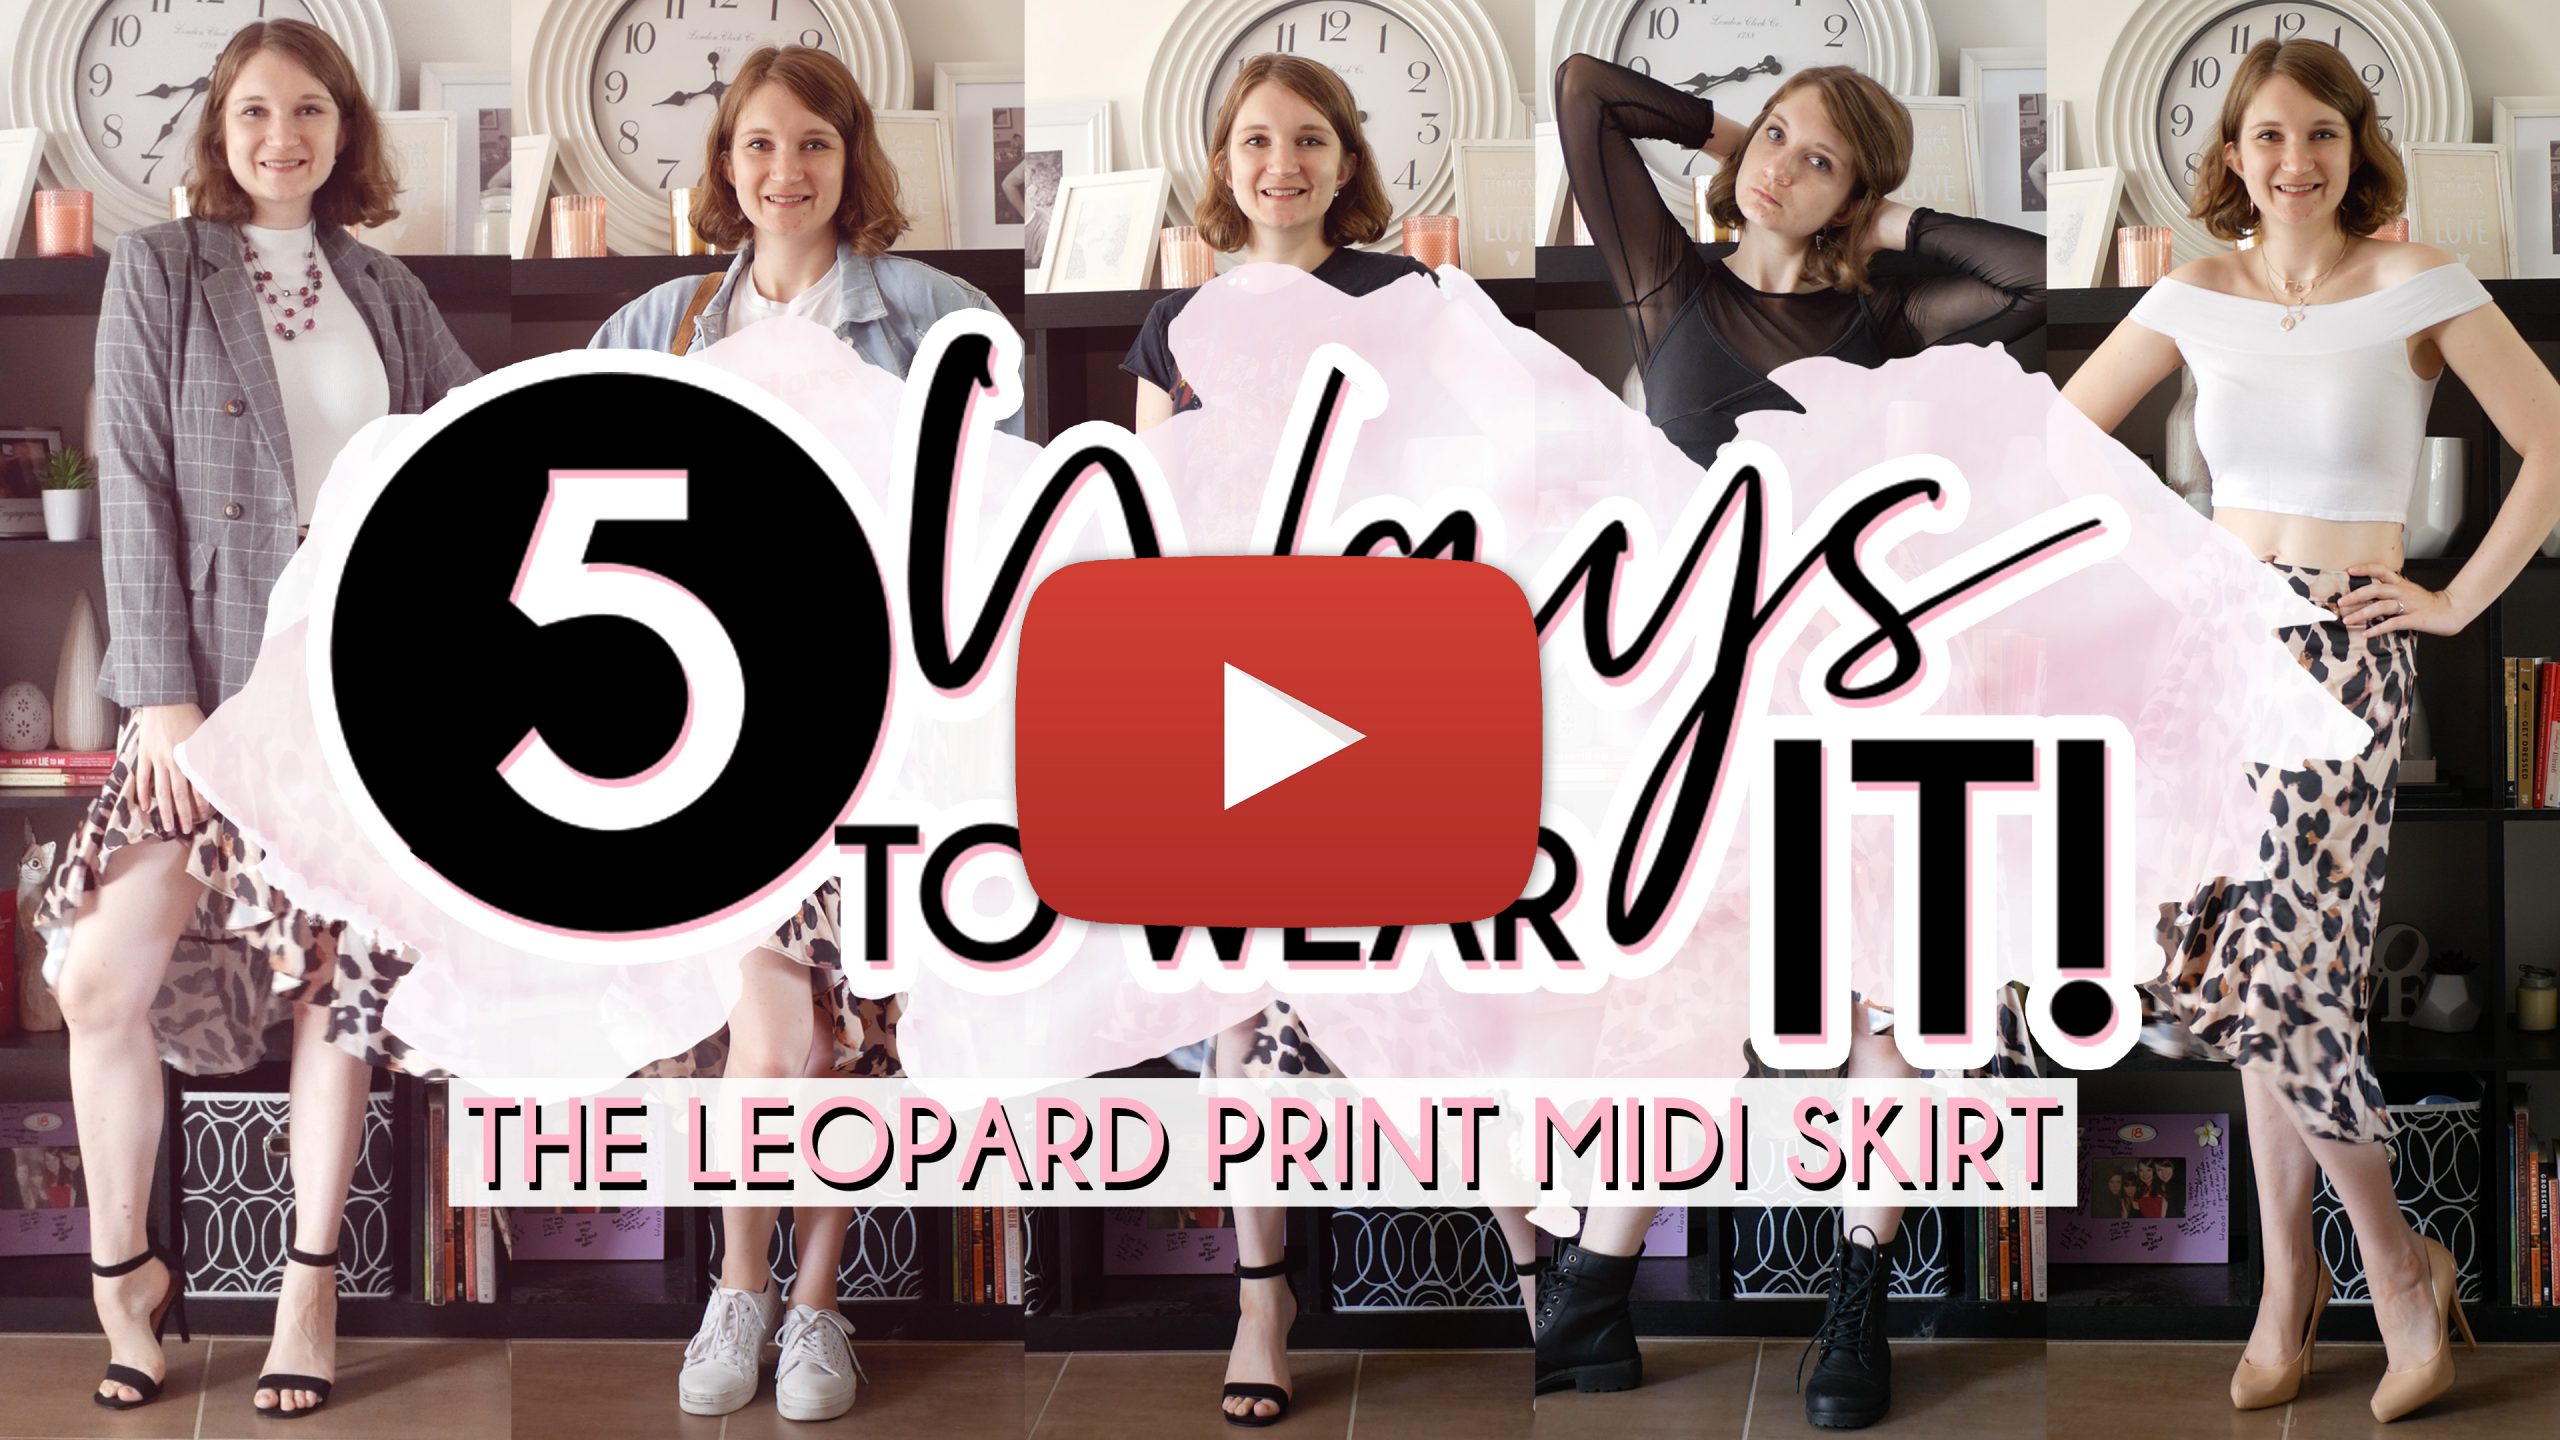 5 Ways to Wear (Leopard Print Midi Skirt) Youtube Thumbnail Play Button